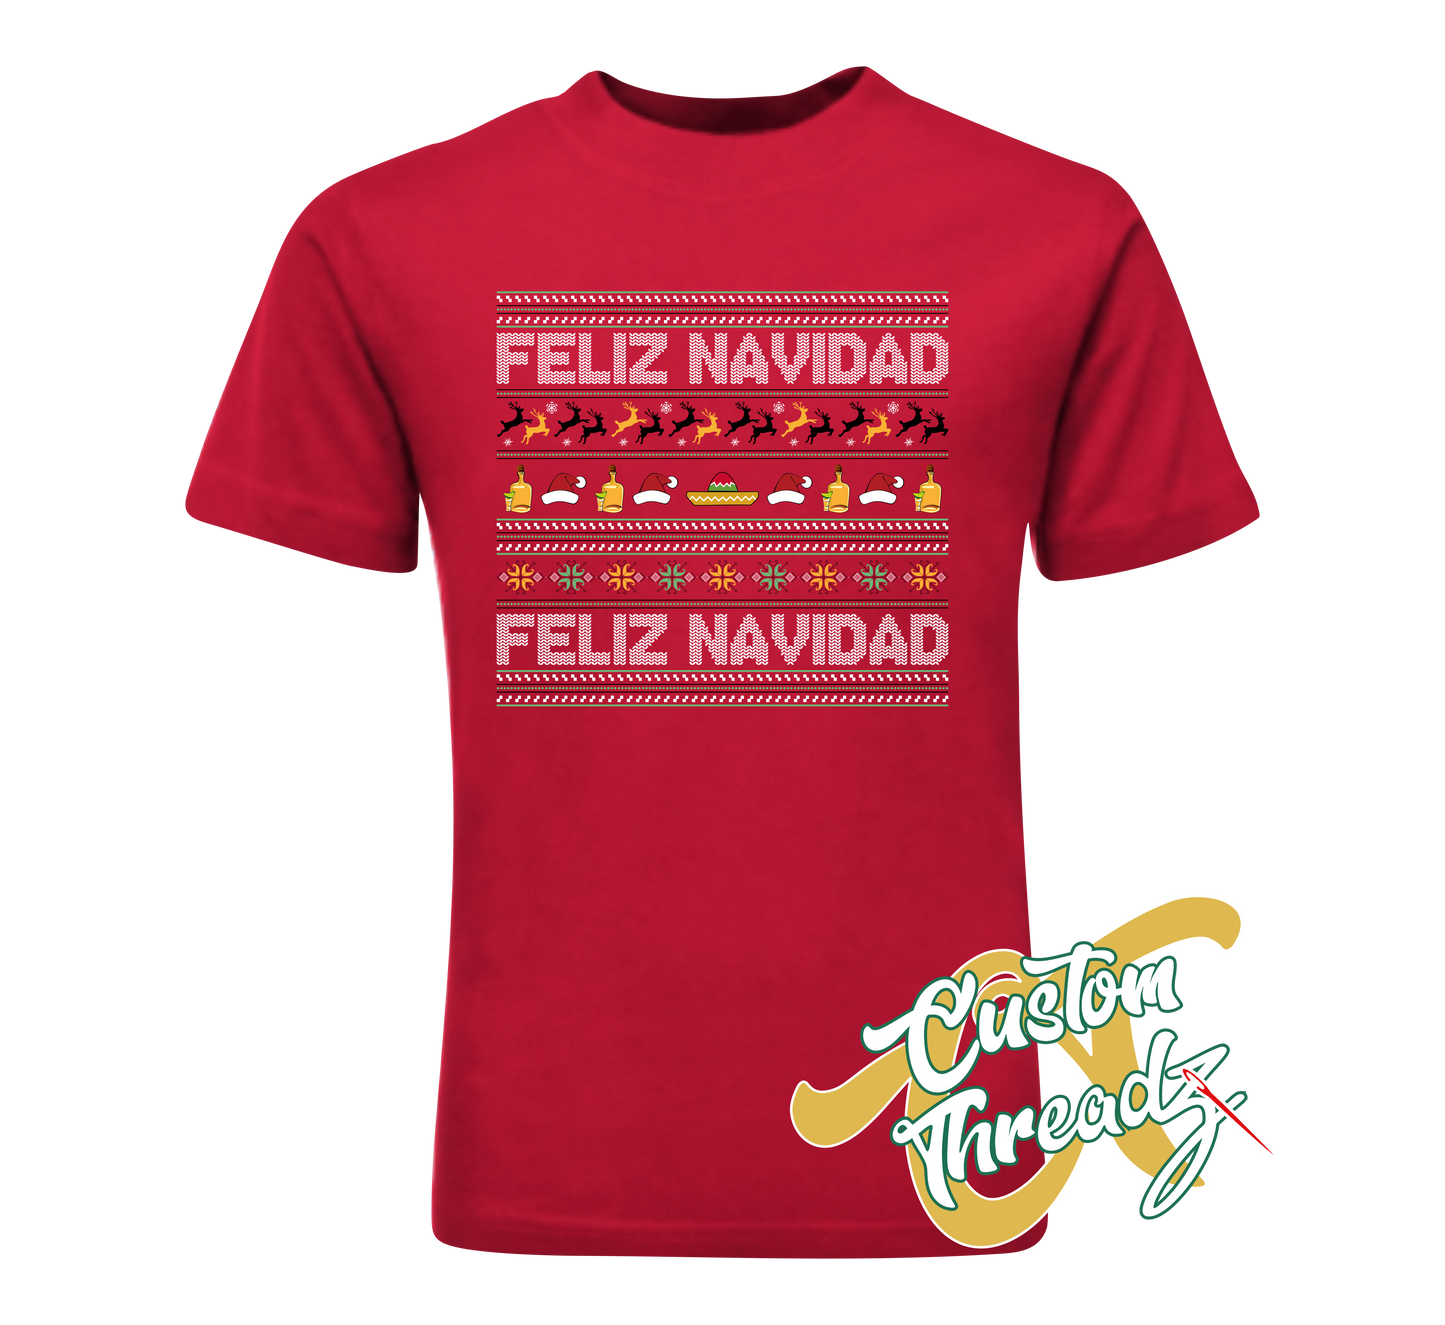 red t-shirt with feliz navidad christmas DTG printed design